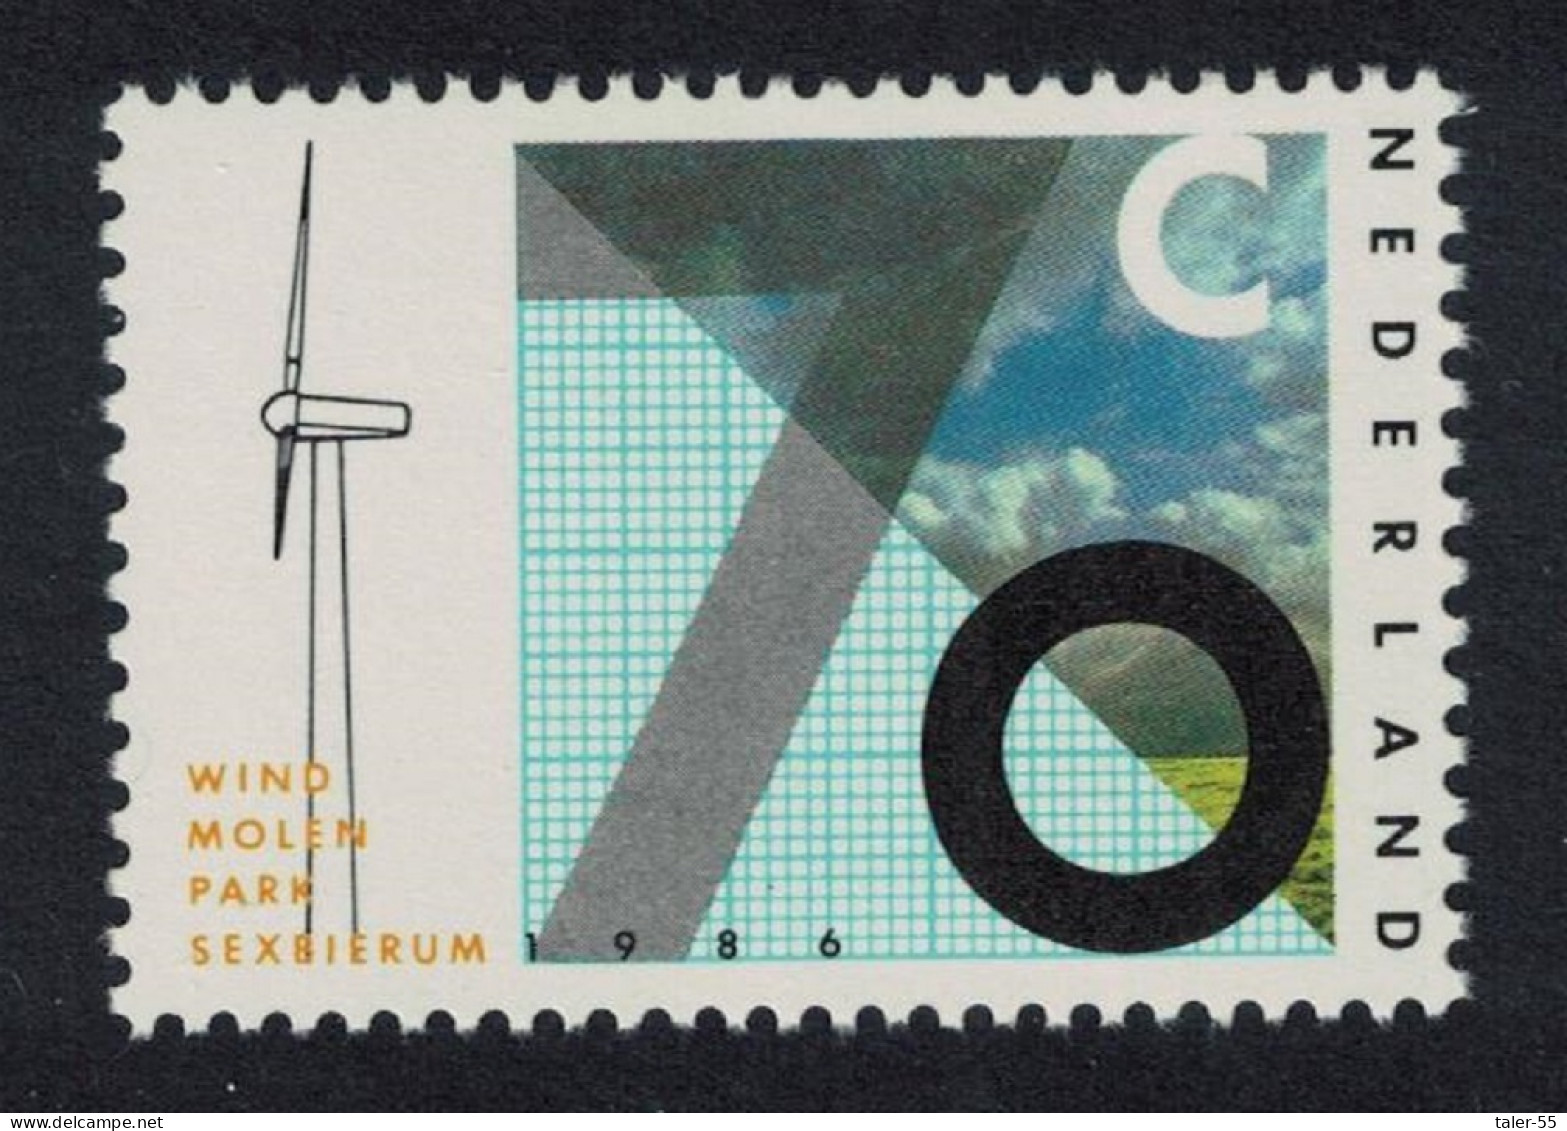 Netherlands Windmill Test Station Sexbierum 1986 MNH SG#1479 - Neufs